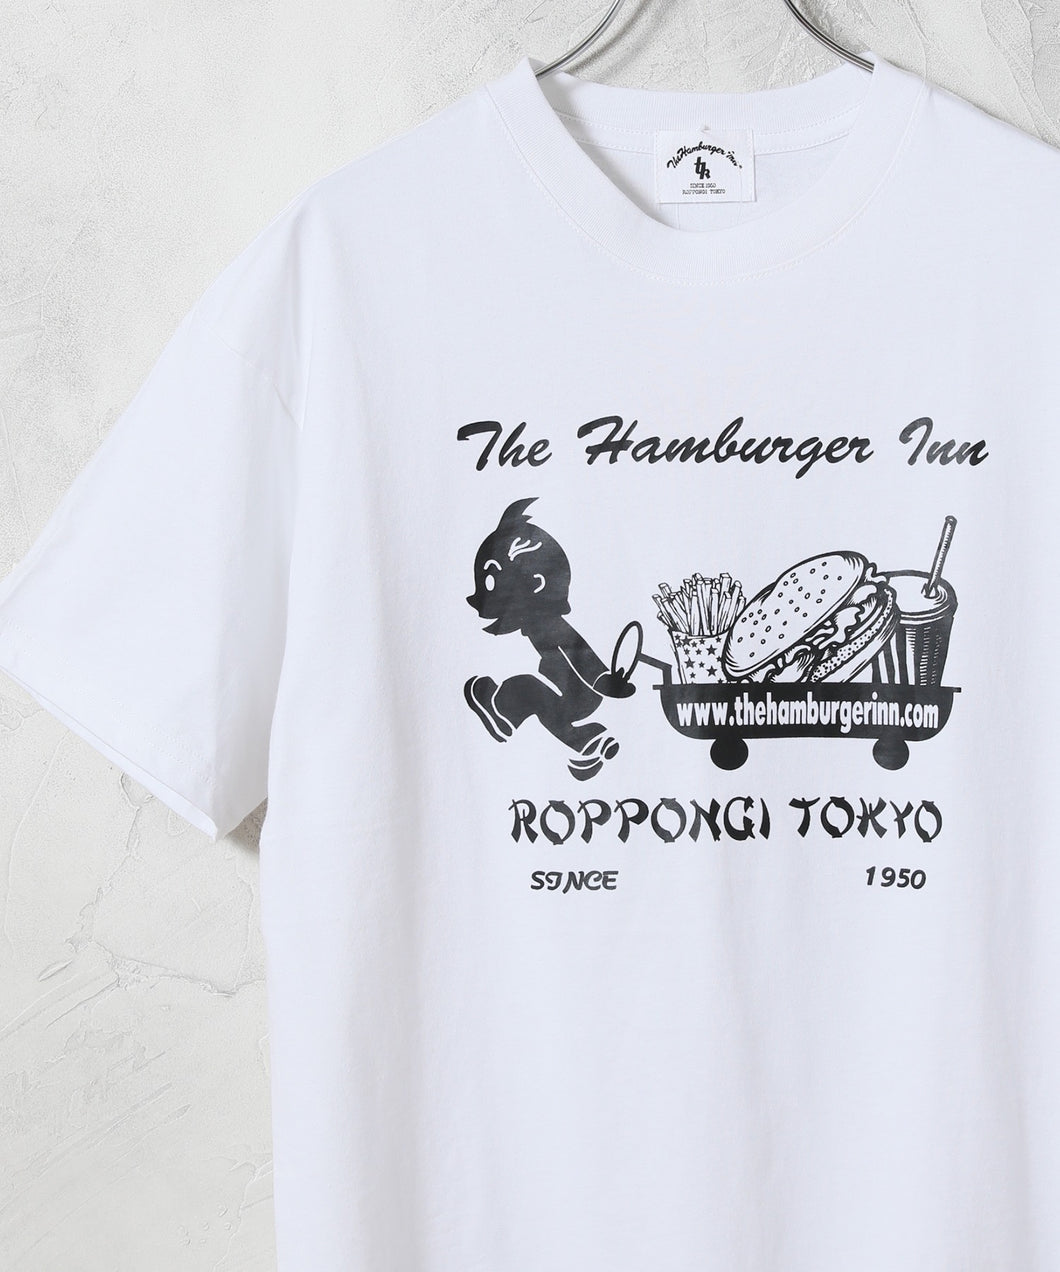 【THE HAMBARGAR INN/ザ・ハンバーガー・イン】クラシックプリントTシャツ(BOY)